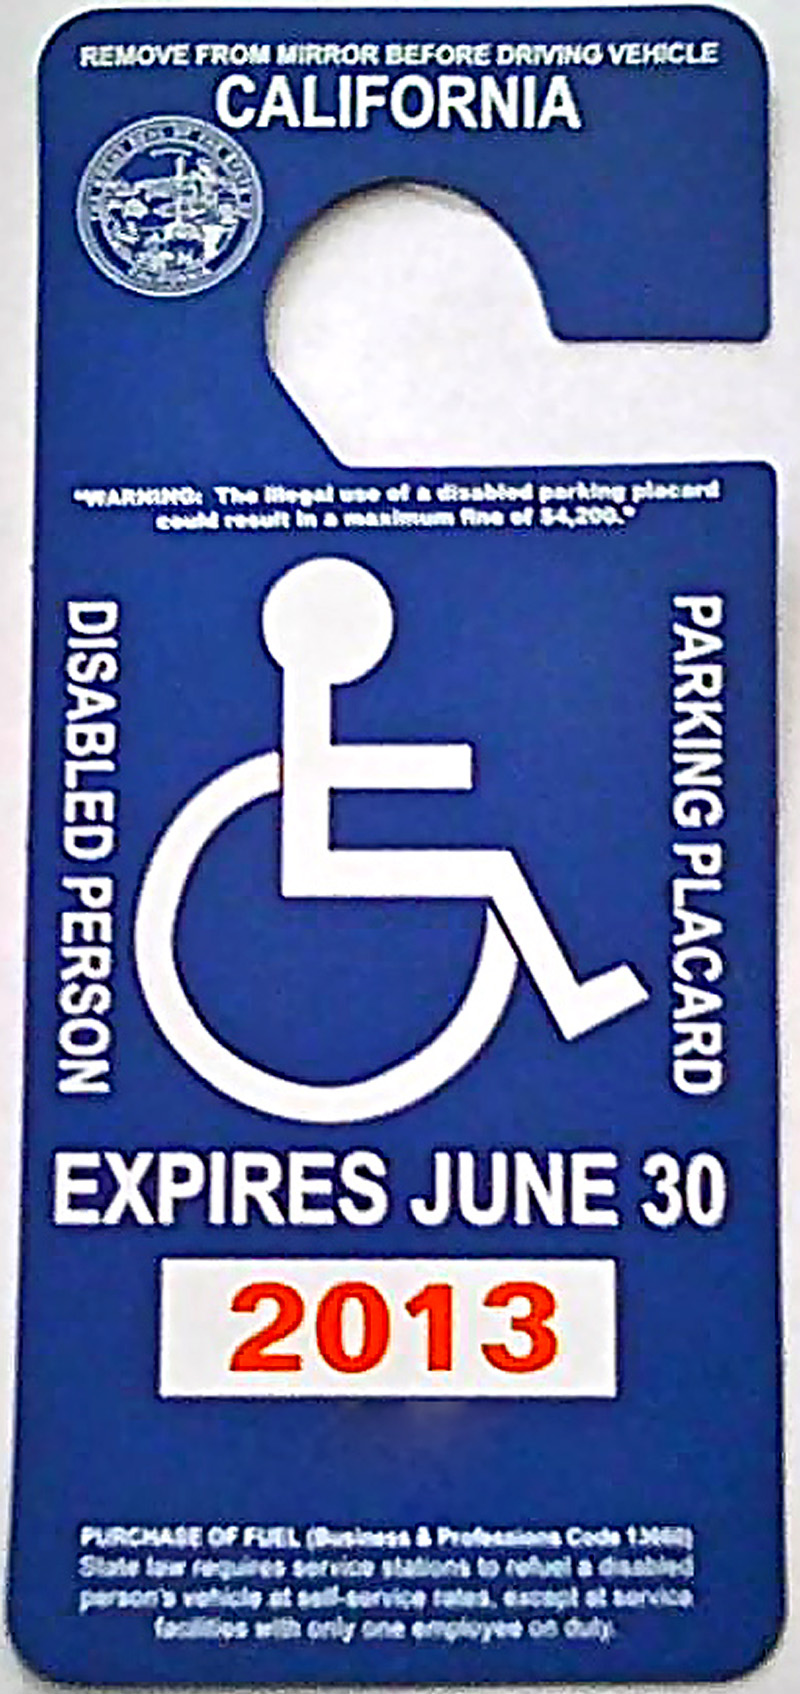 SCVNews DMV Going After Disabled Placard Fraudsters 07 14 2014